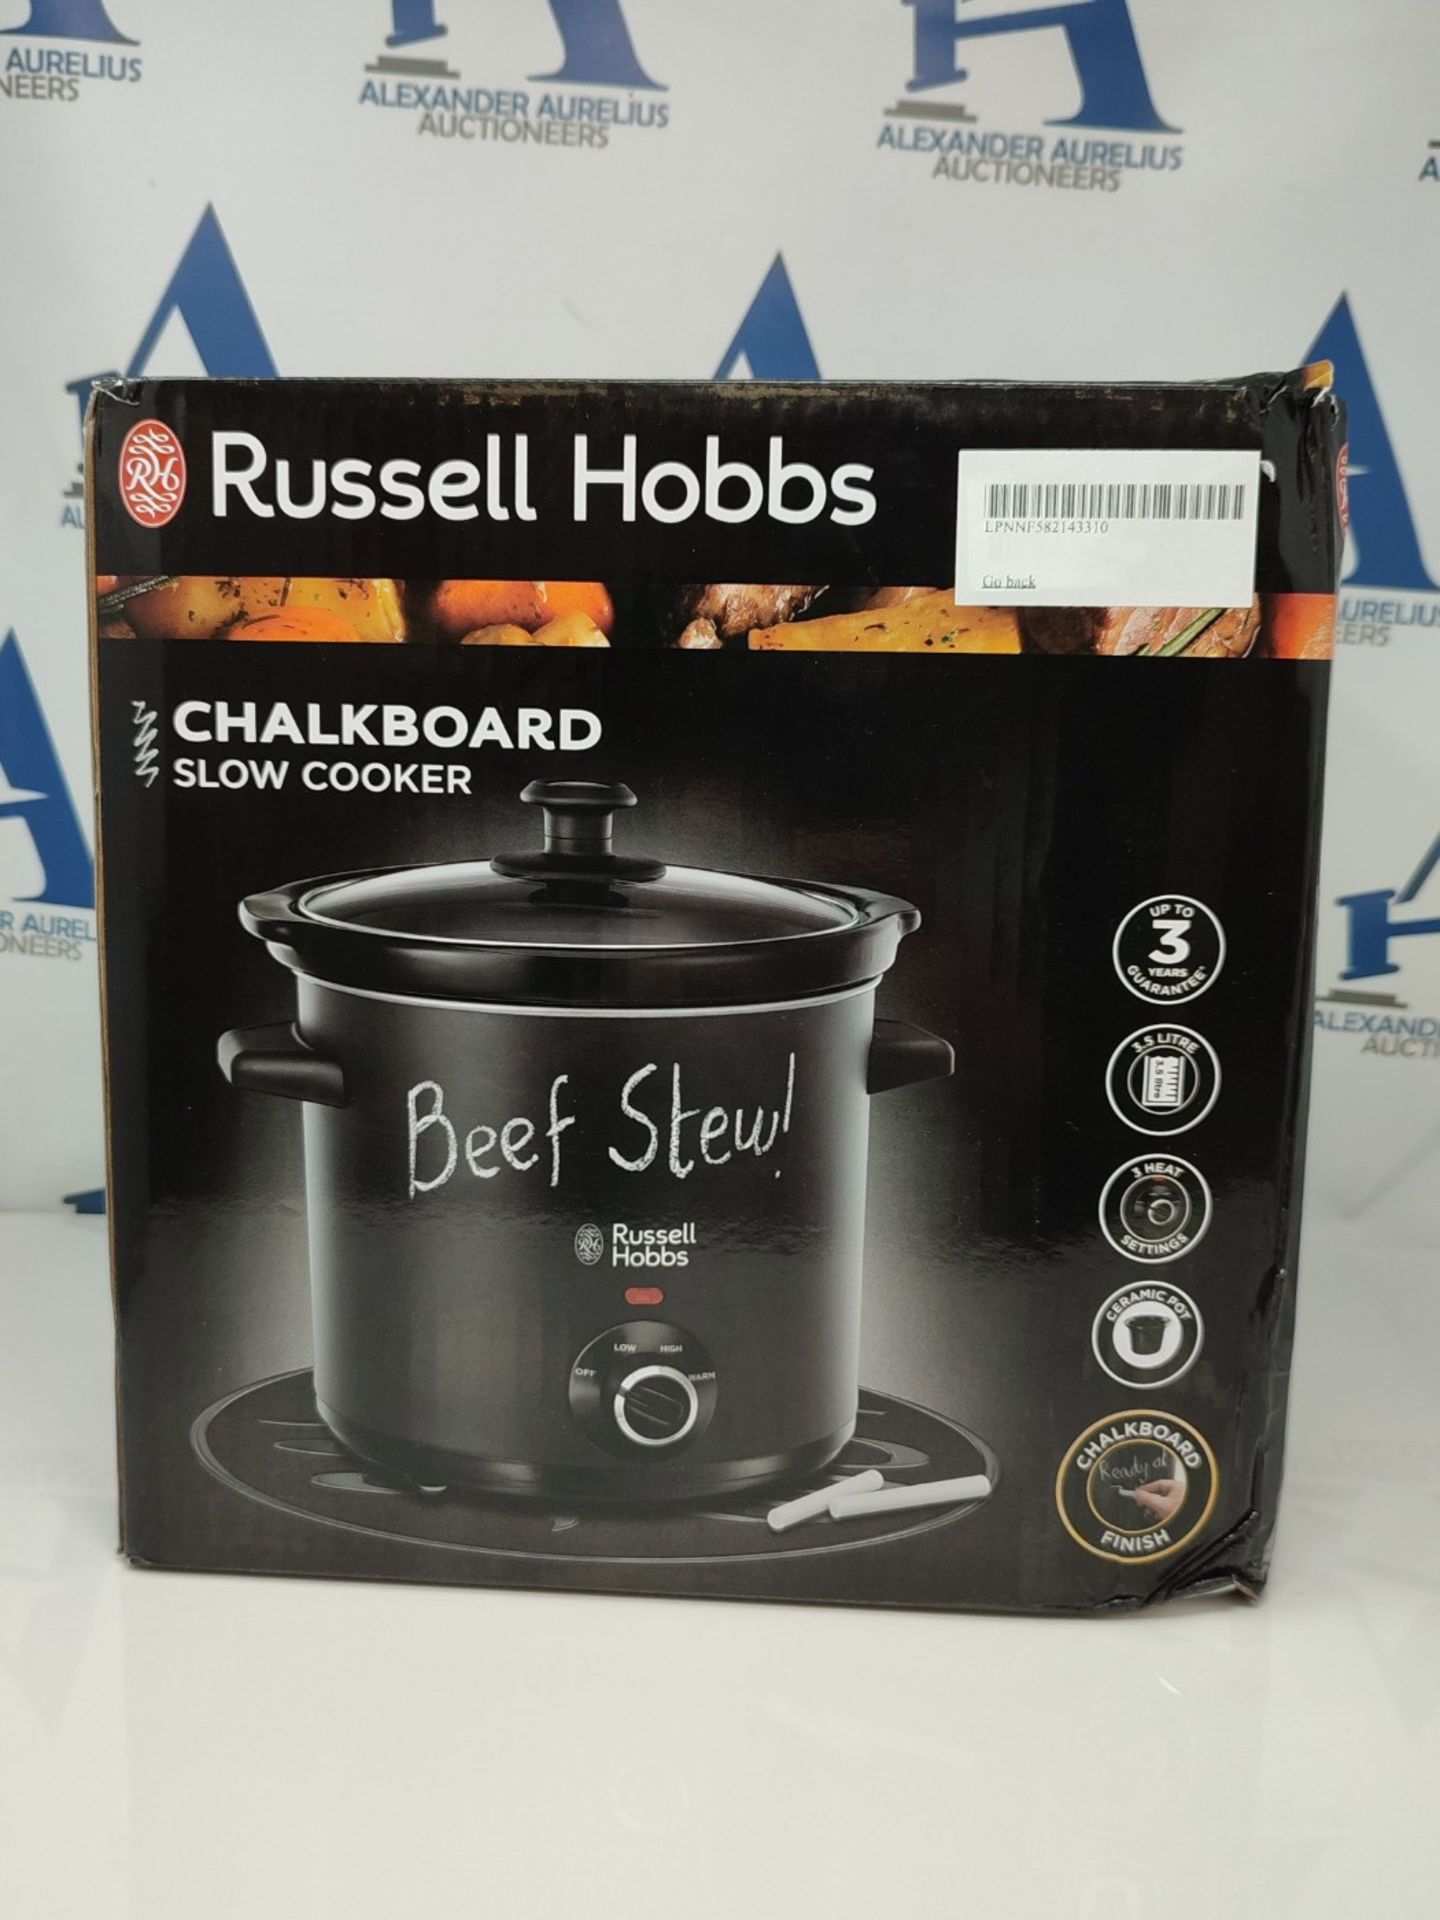 Russell Hobbs 24180 Chalkboard Slow Cooker, 3.5 L, Black - Image 2 of 3